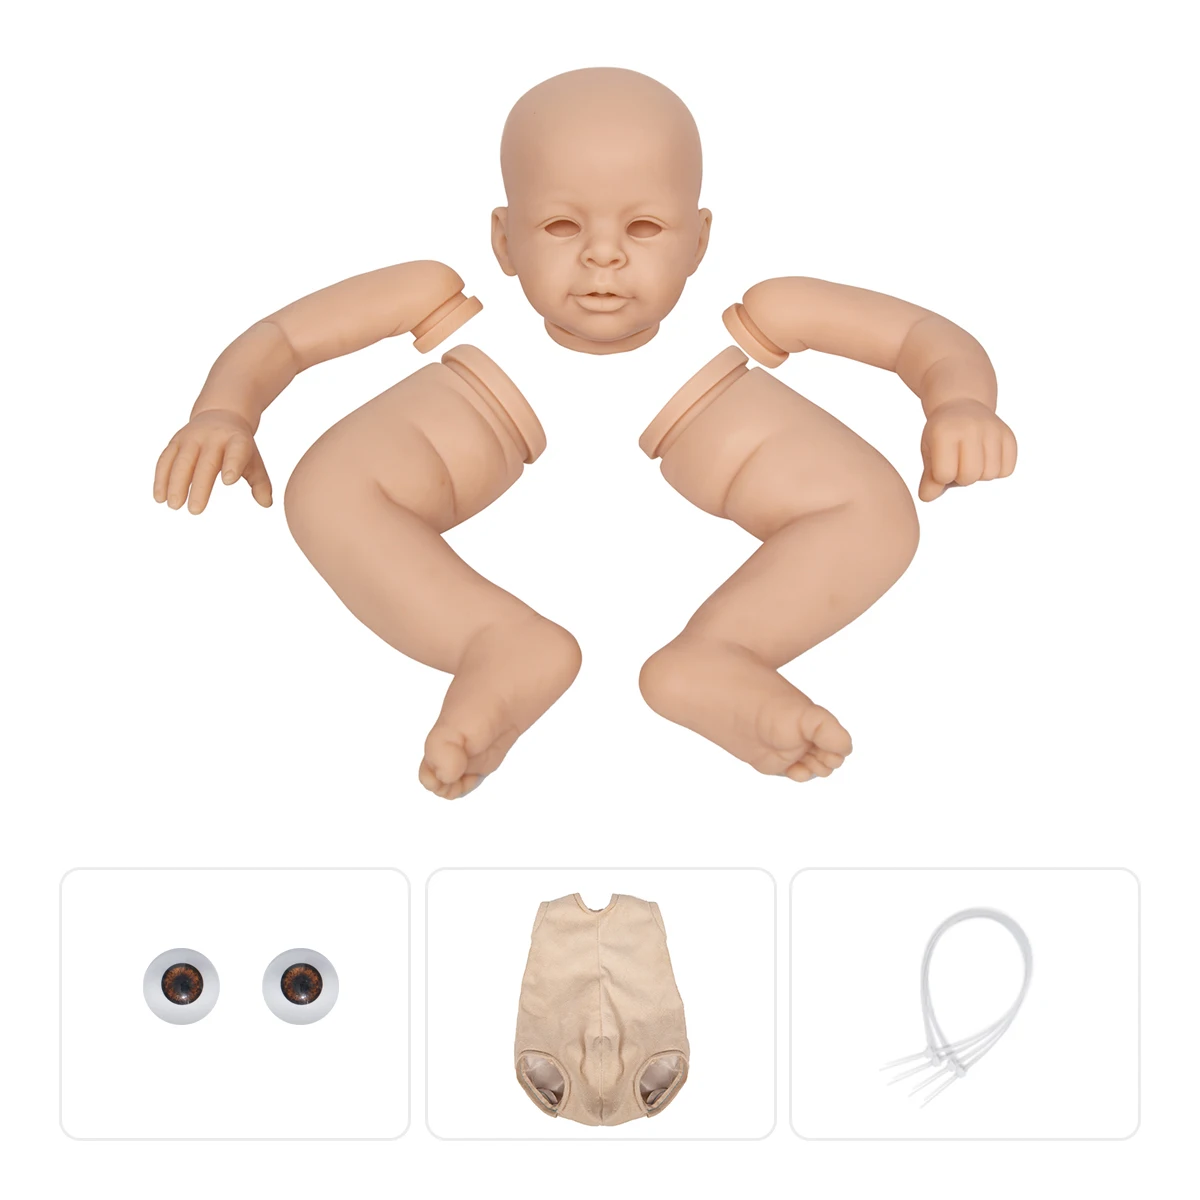 ❤️Original Size❤️ 23 Inches Bebe Reborn Doll Kit Juliana Blank Unfinished  Unpainted Vinyl Molds